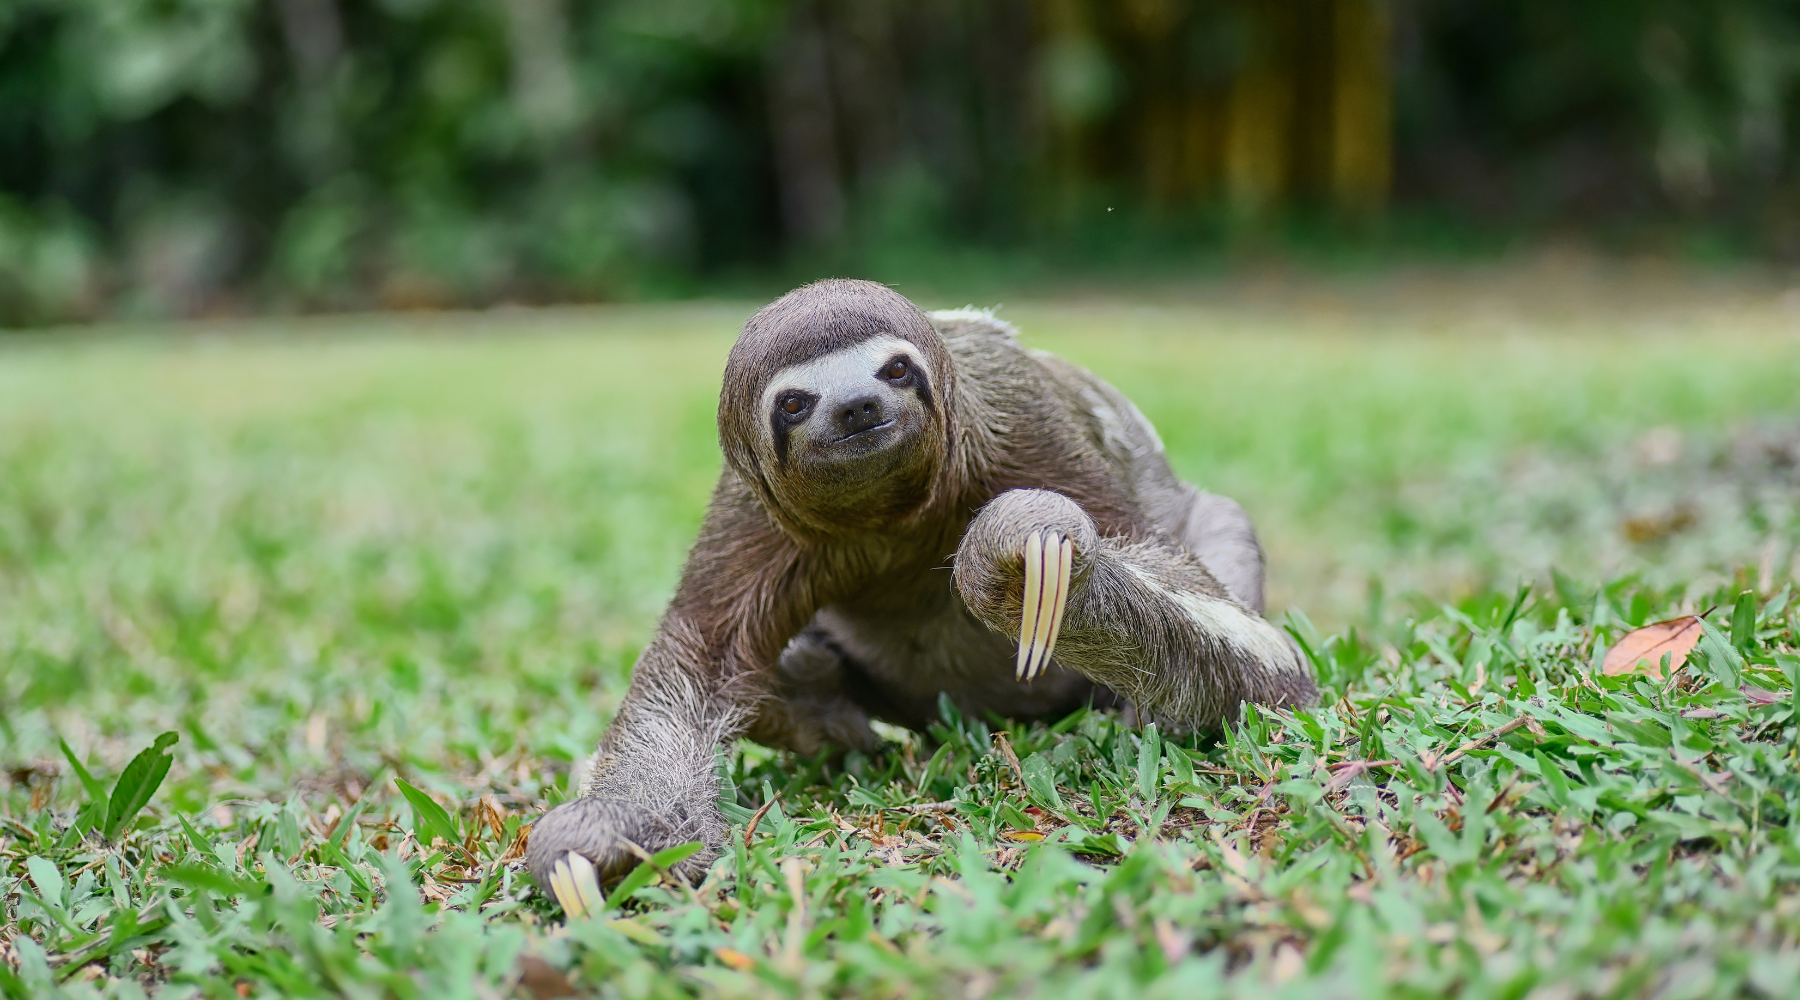 Endangered pygmy three-toed sloth on ground